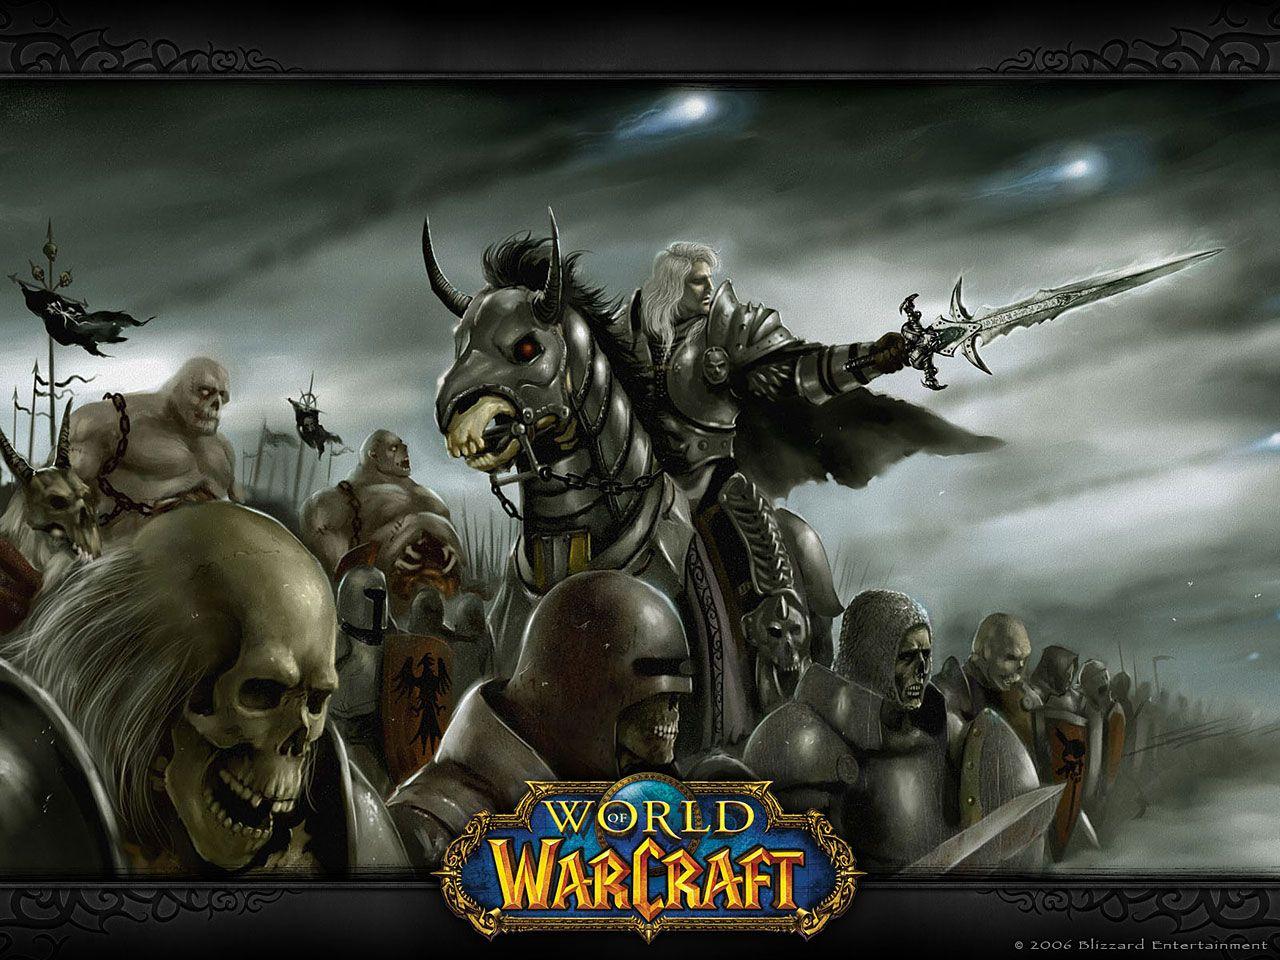 Taurens at Thunderbluff of Warcraft. Tauren